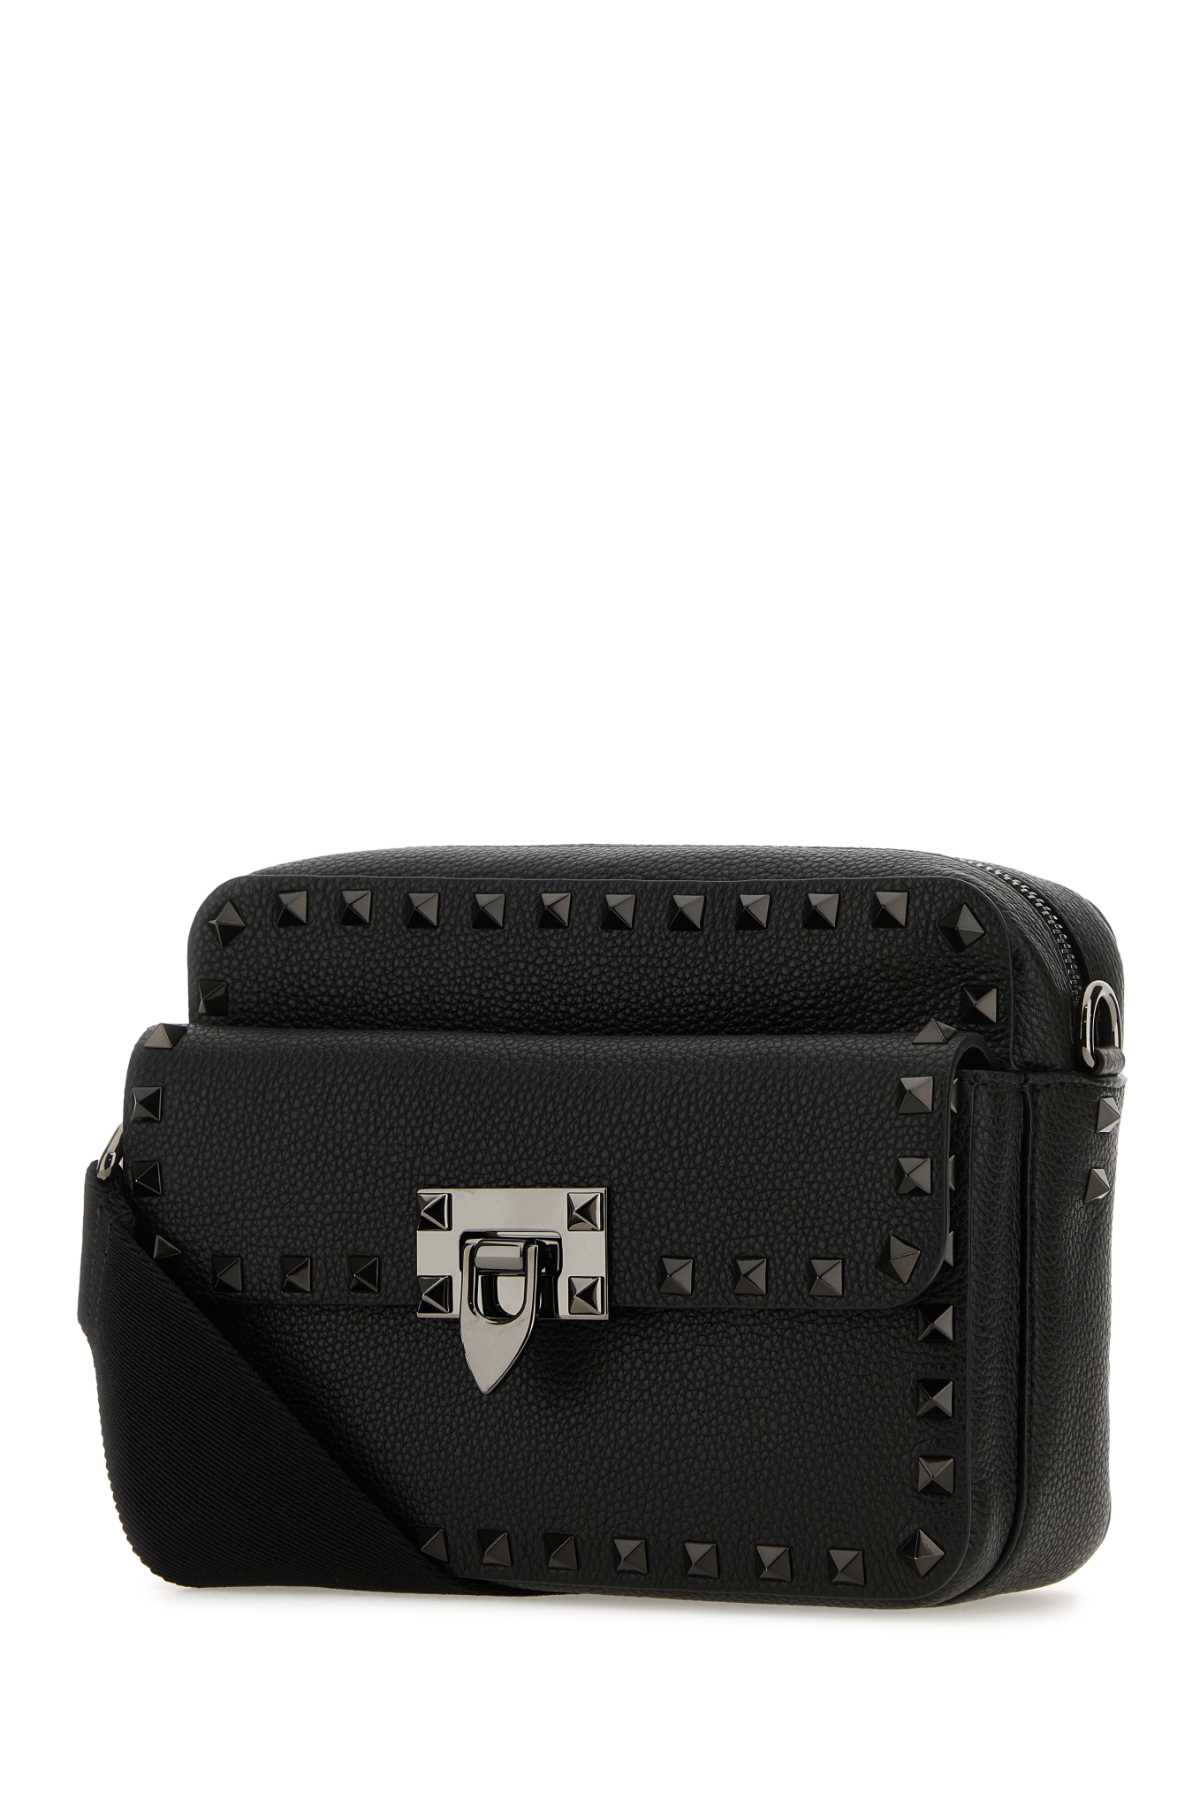 Valentino Garavani Black Leather Rockstud Crossbody Bag In Nero